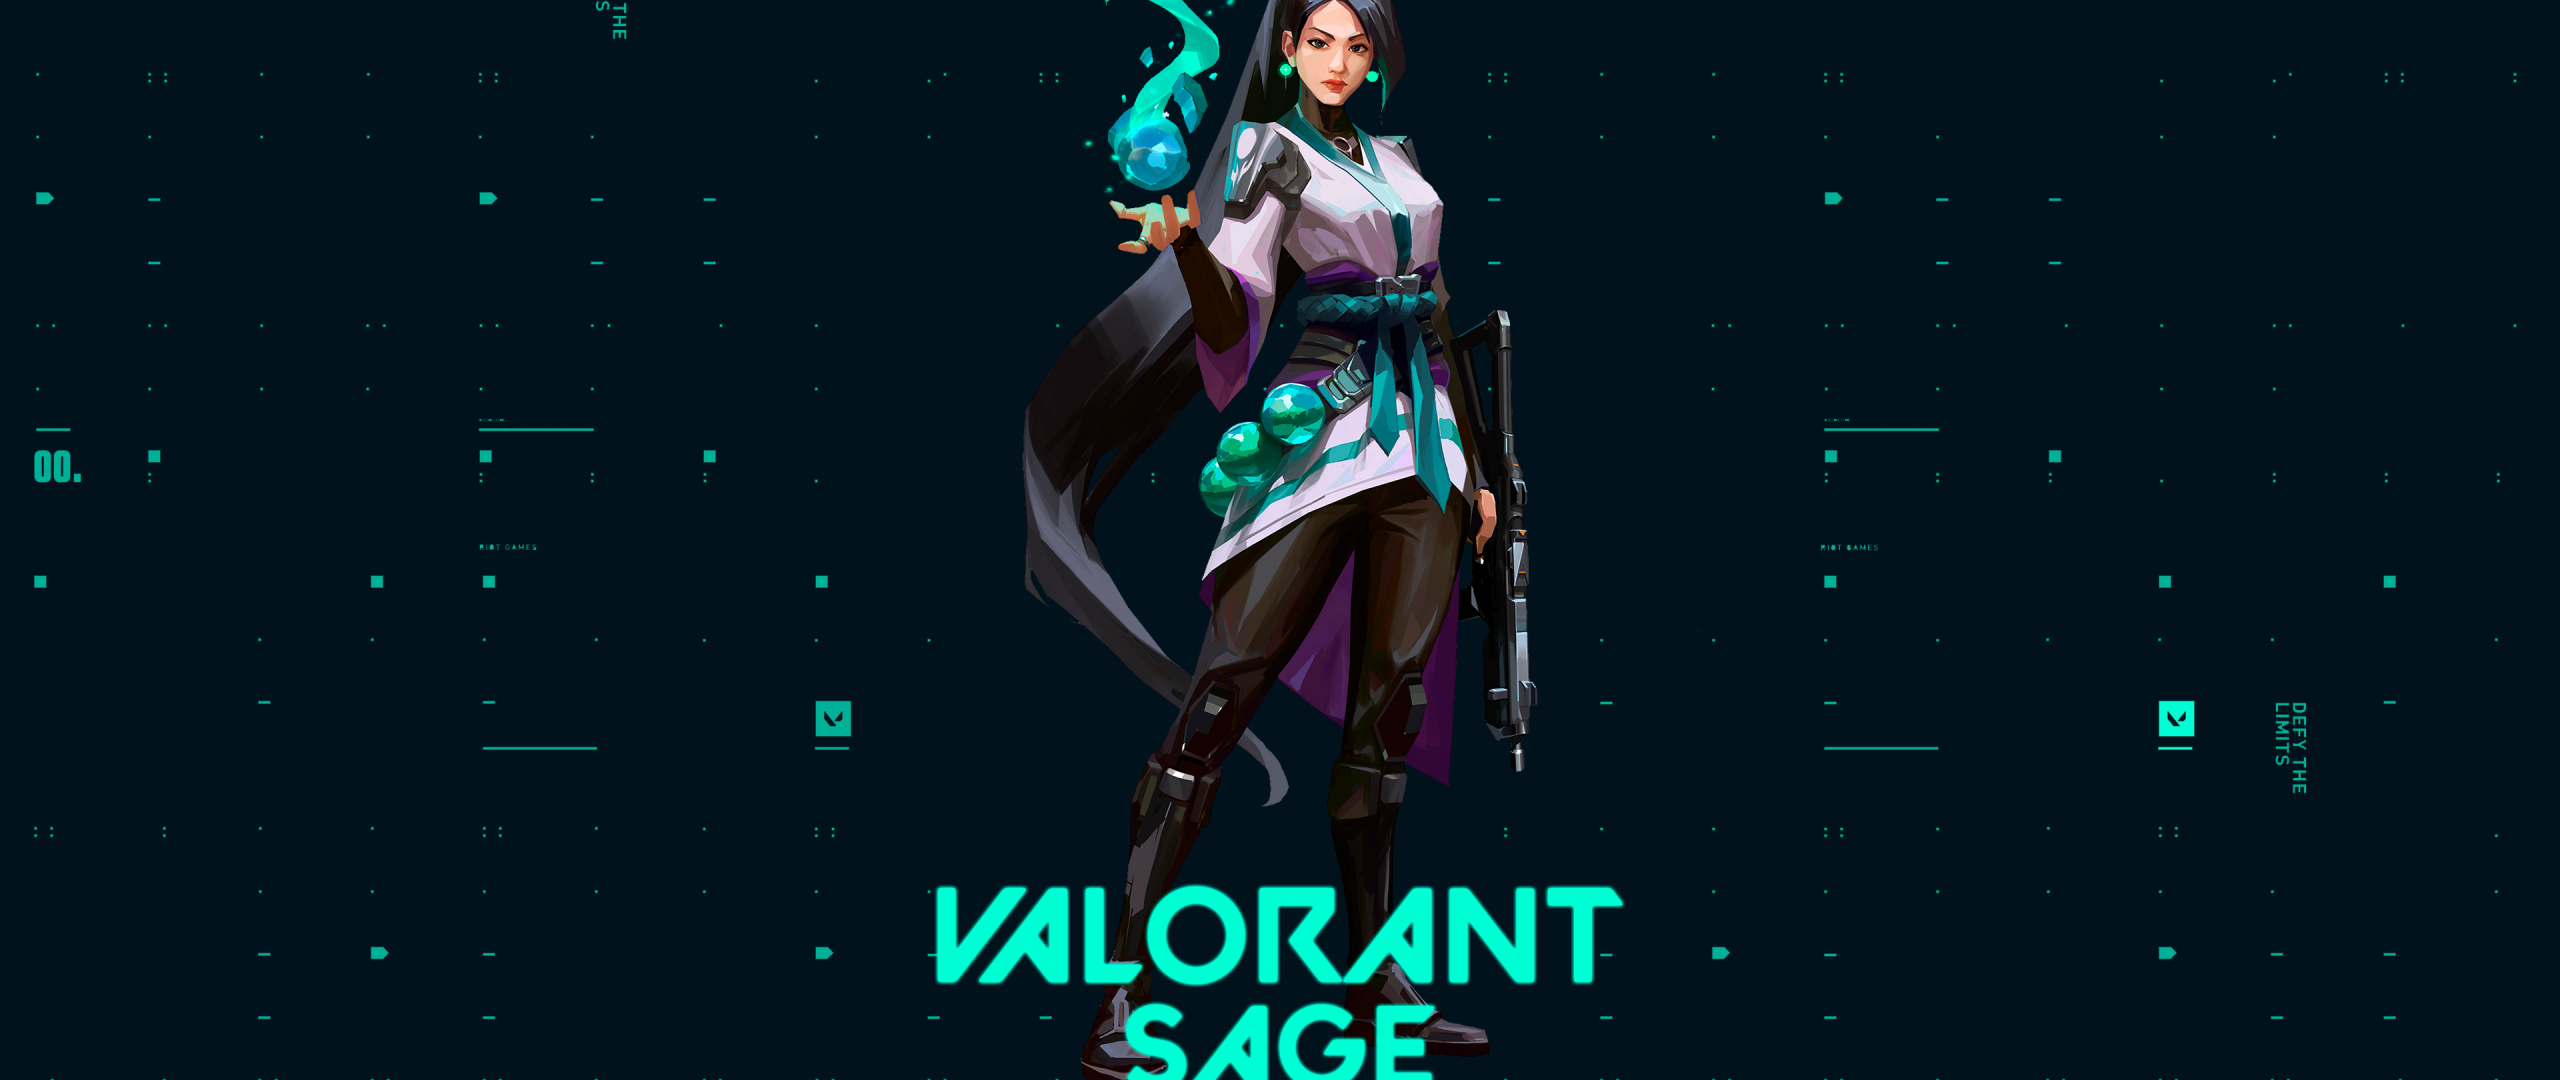 Sage Wallpaper 4K, Valorant, PC Games, 2020 Games, Games